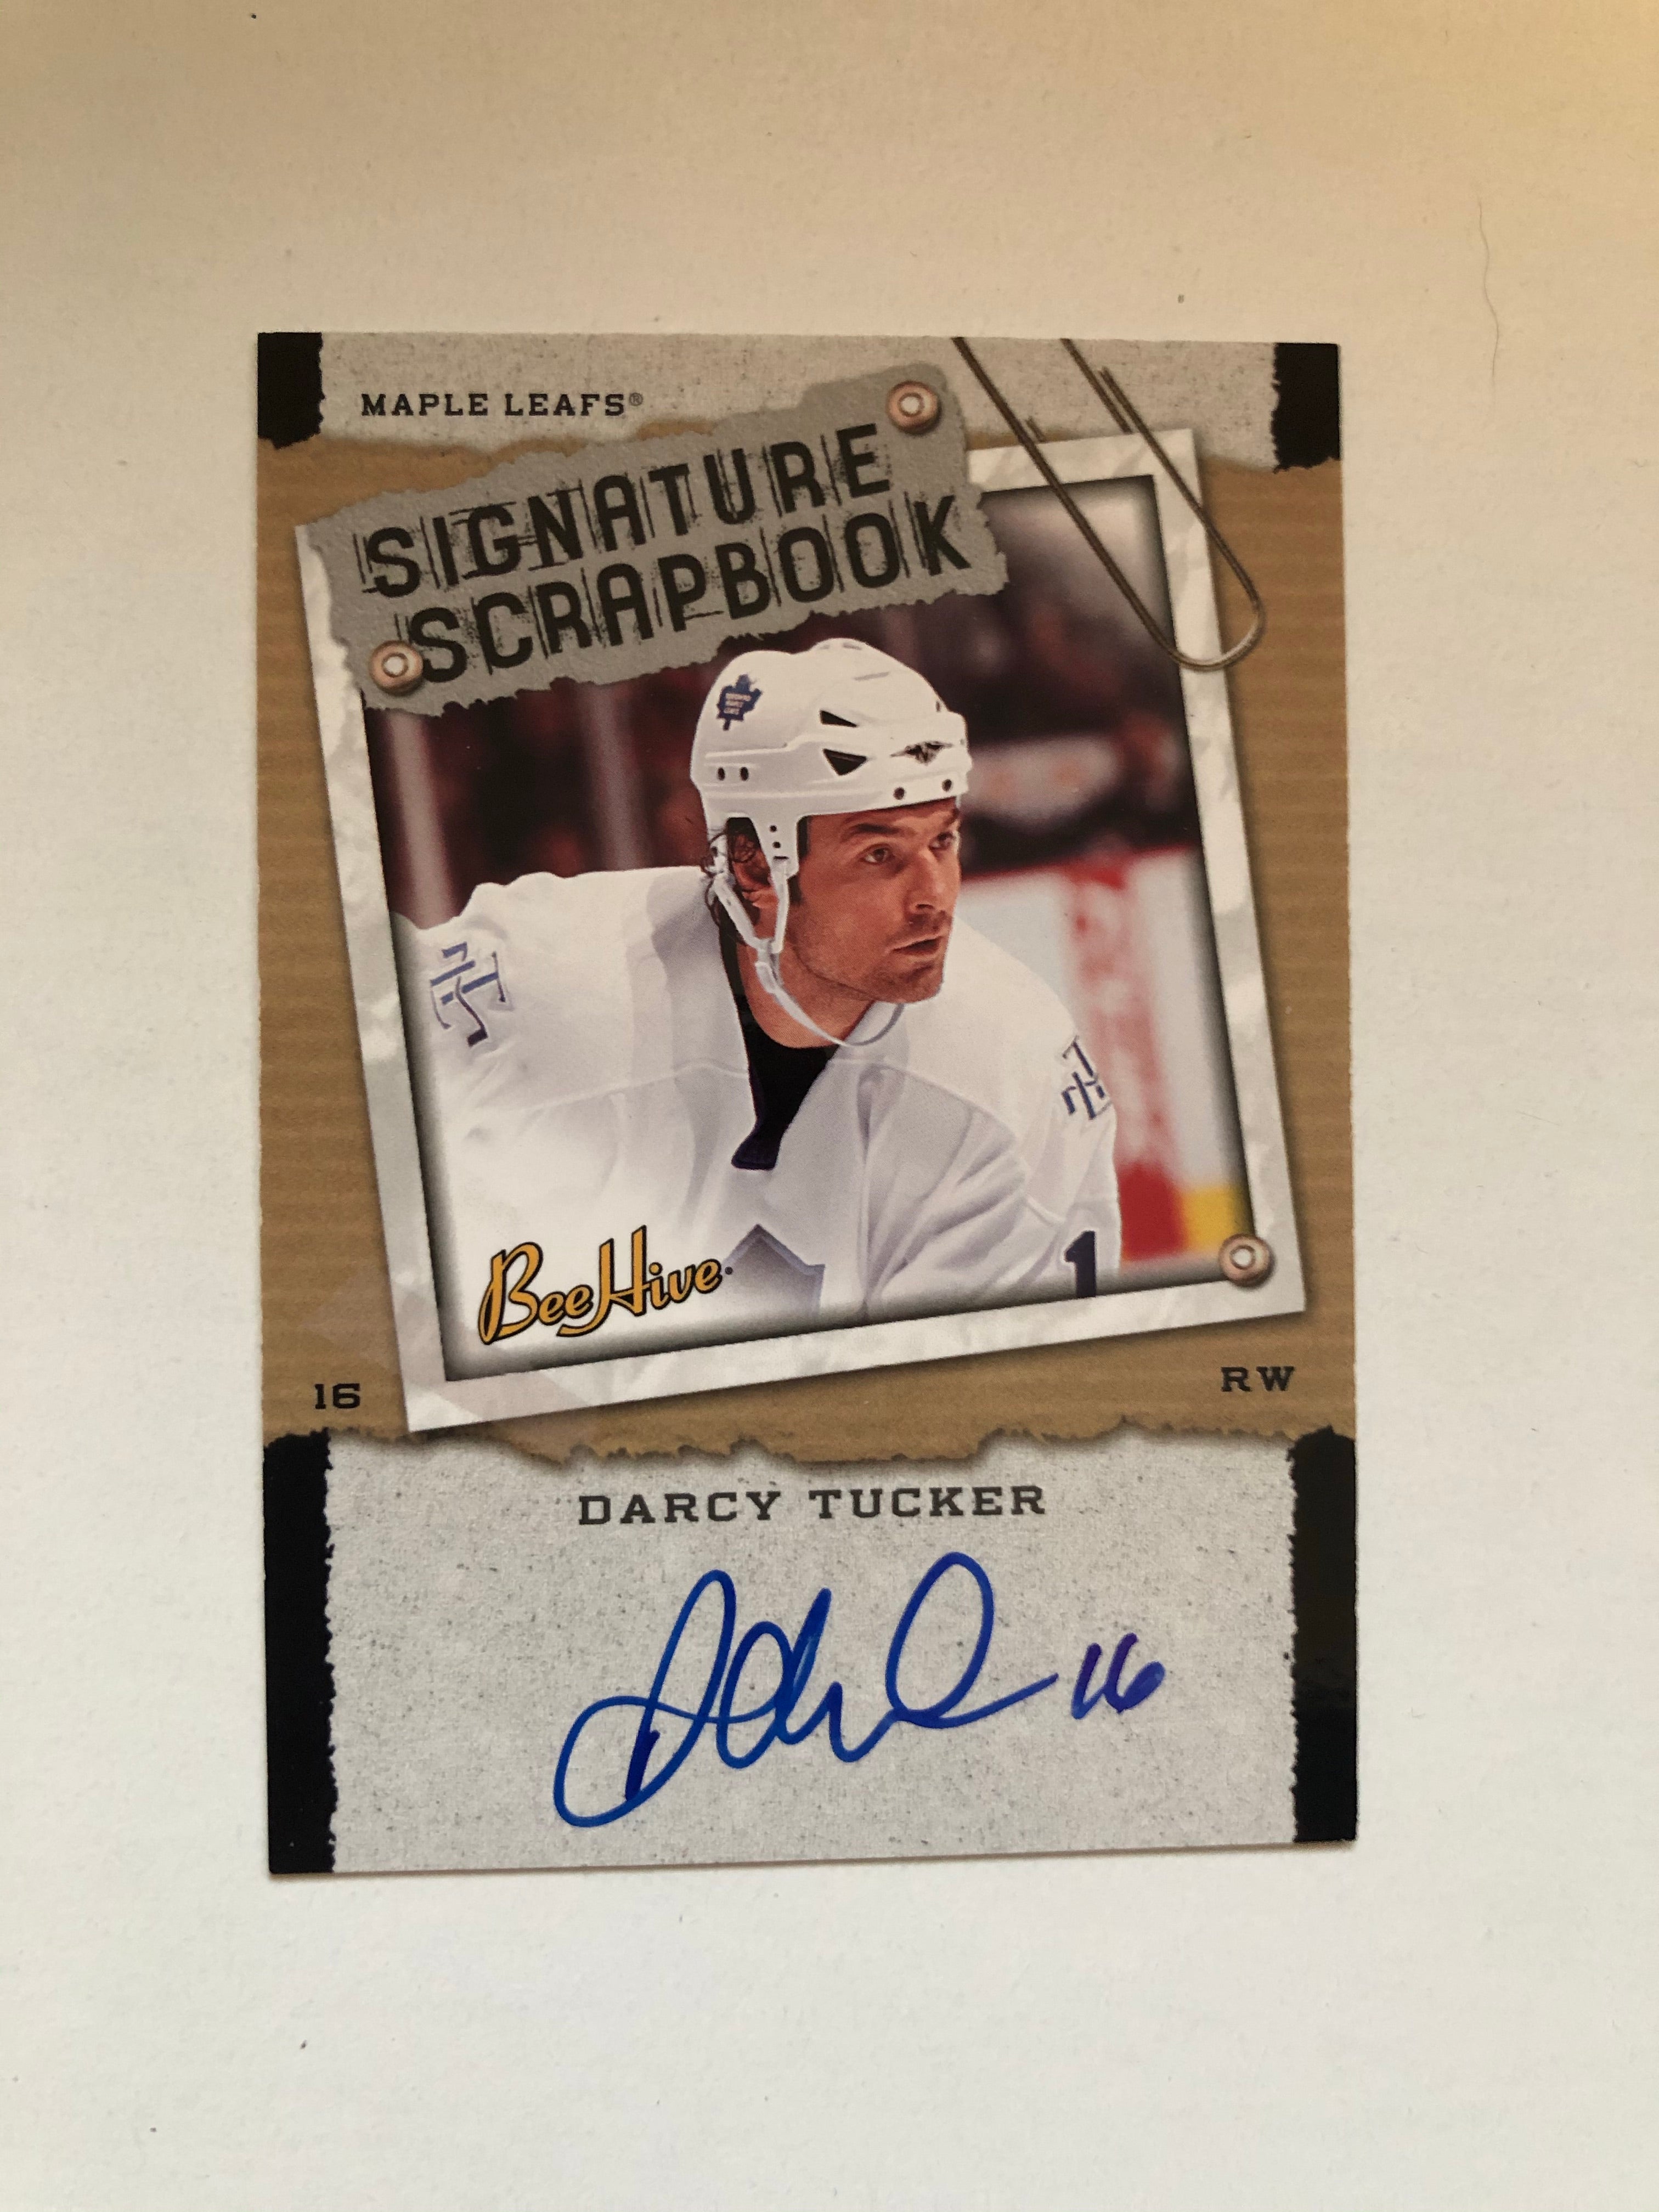 Toronto Maple Leafs Darcy Tucker autograph insert card